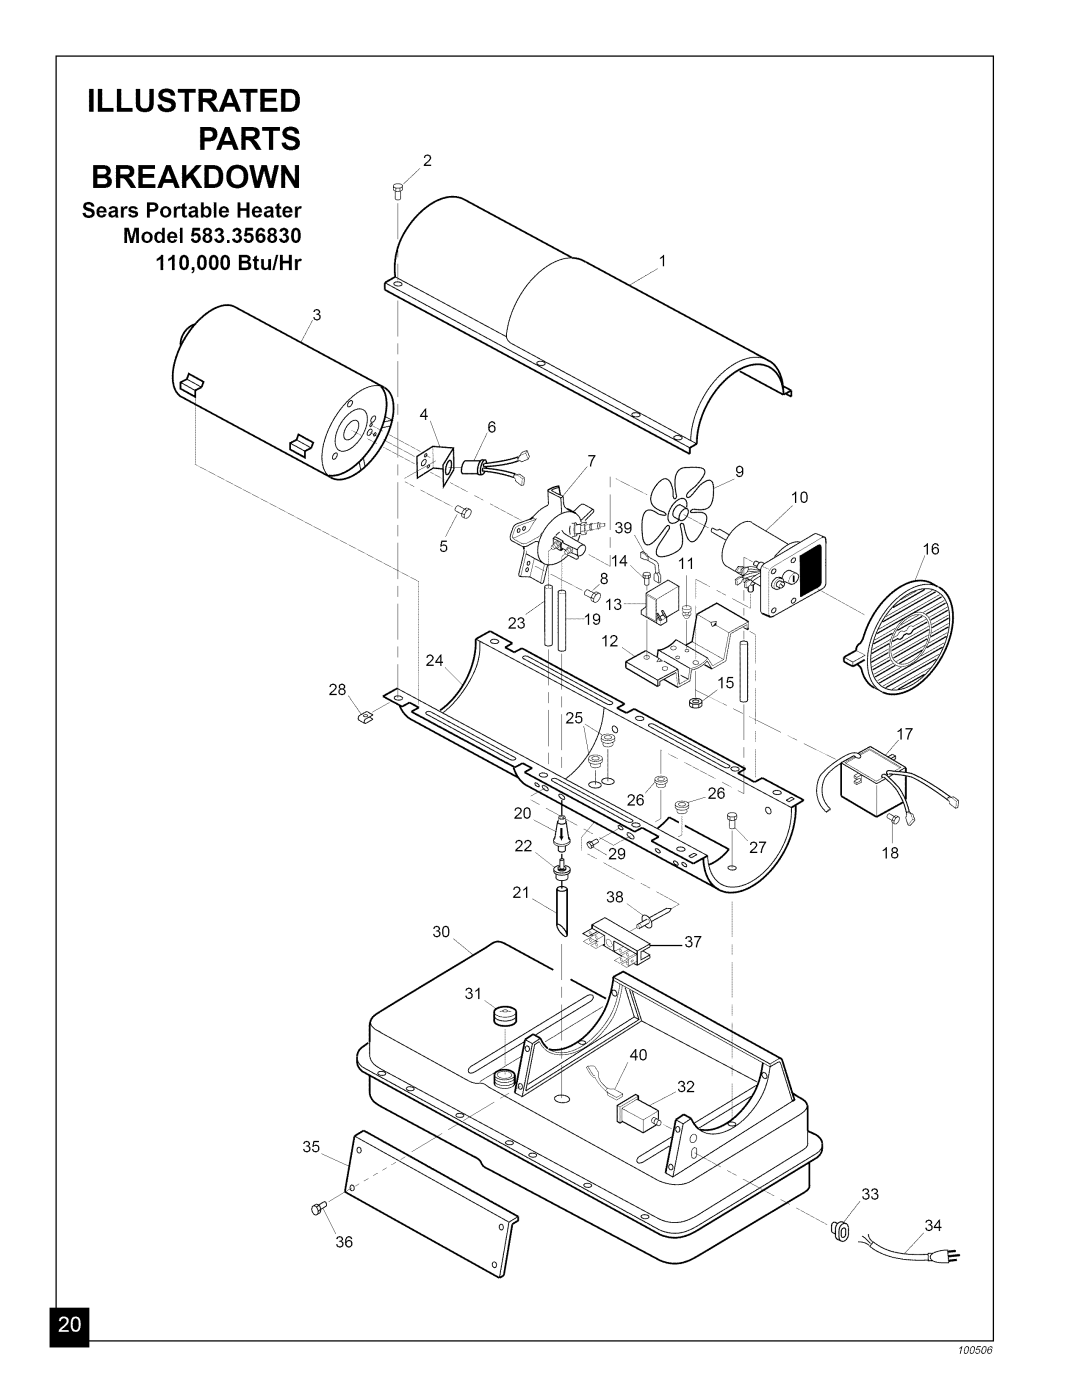 Sears 583.3565, 583.35683, 583.35682 Sears Portable Heater Model 110,000 Btu/Hr, Illustrated Parts Breakdown, 2138, 10050d 